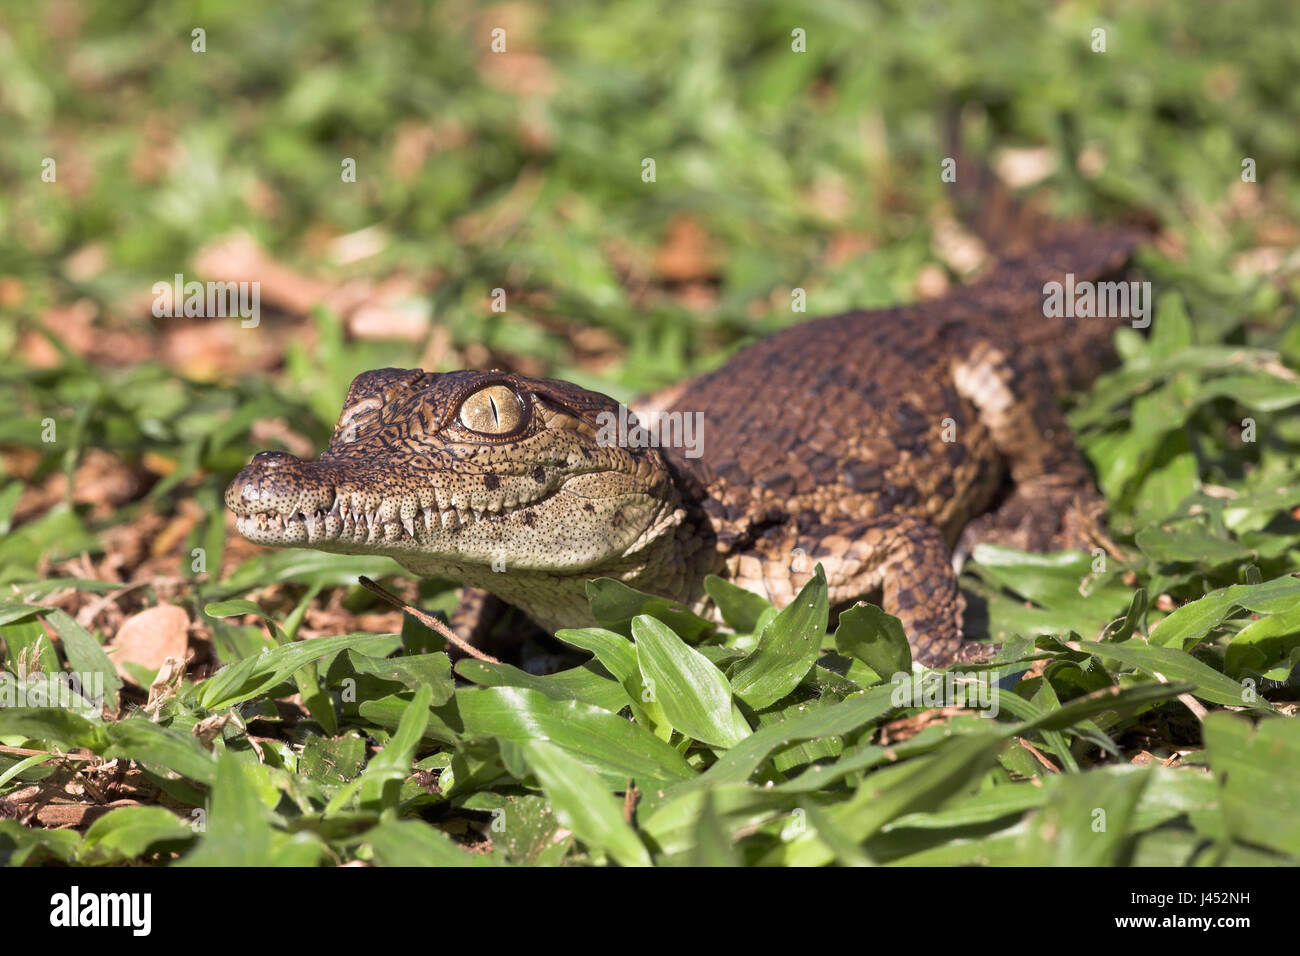 Photo of a nile crocodile hatchling Stock Photo